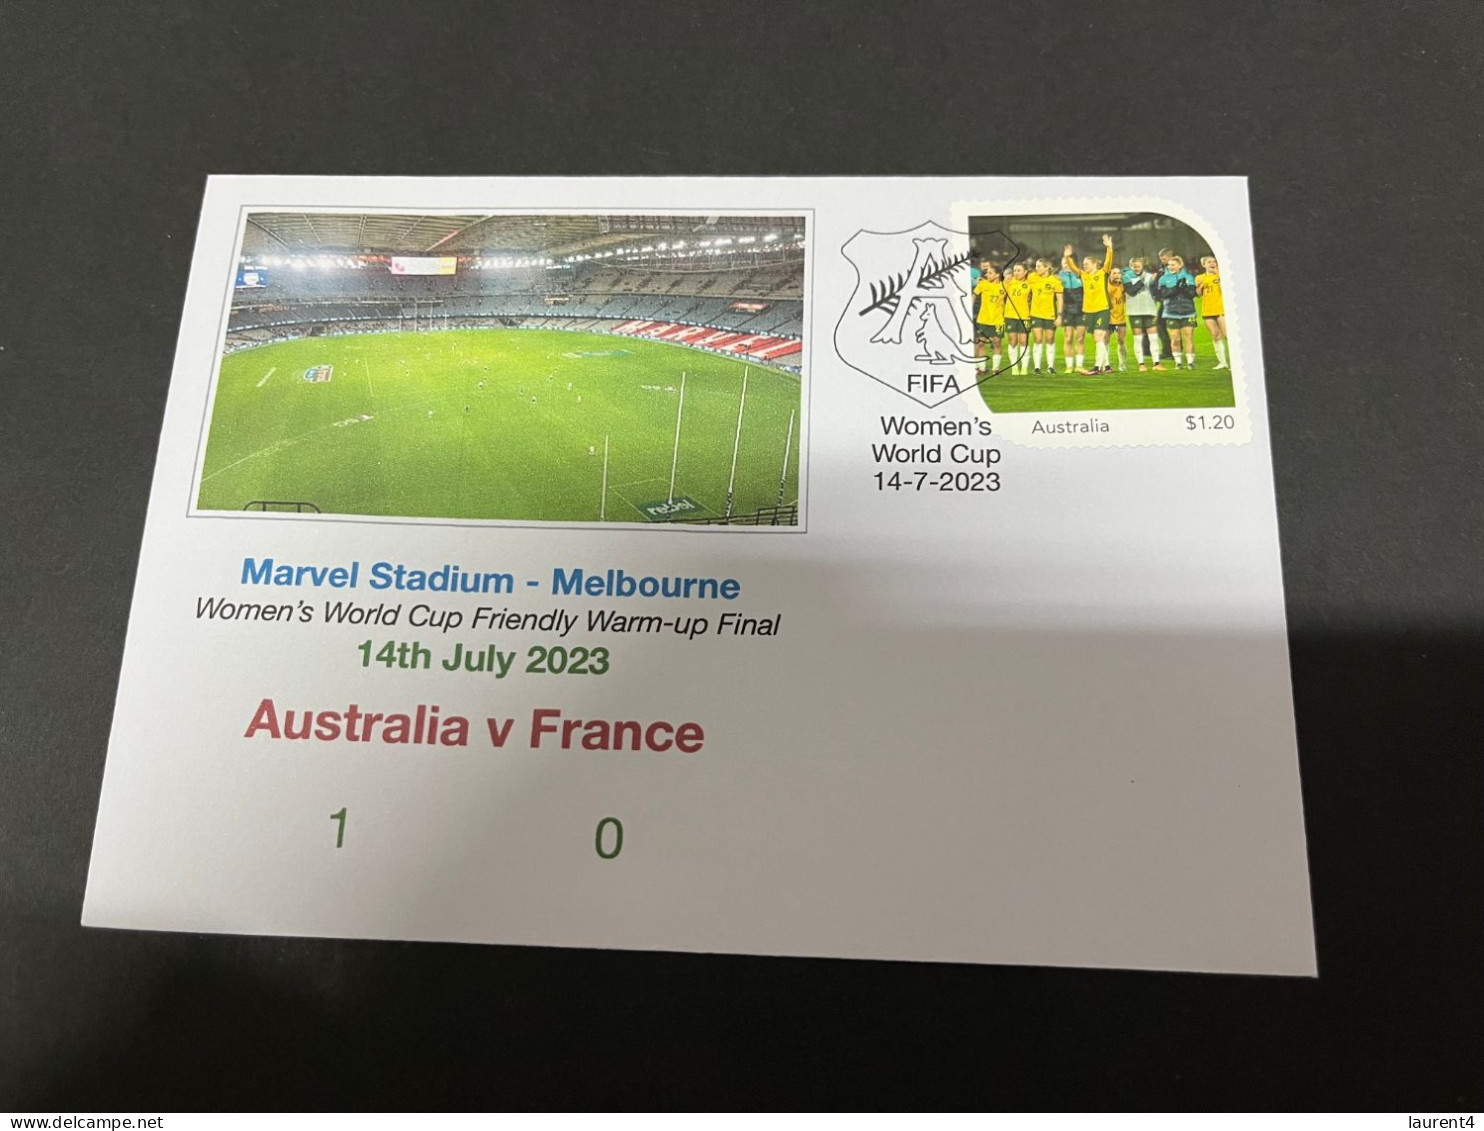 14-7-2023 (2 S 10 A) Women's Football World Cup ($1.20 Matildas Stamp) FIFA Friendly Final - Australia (1) France (0) - 2 Dollars